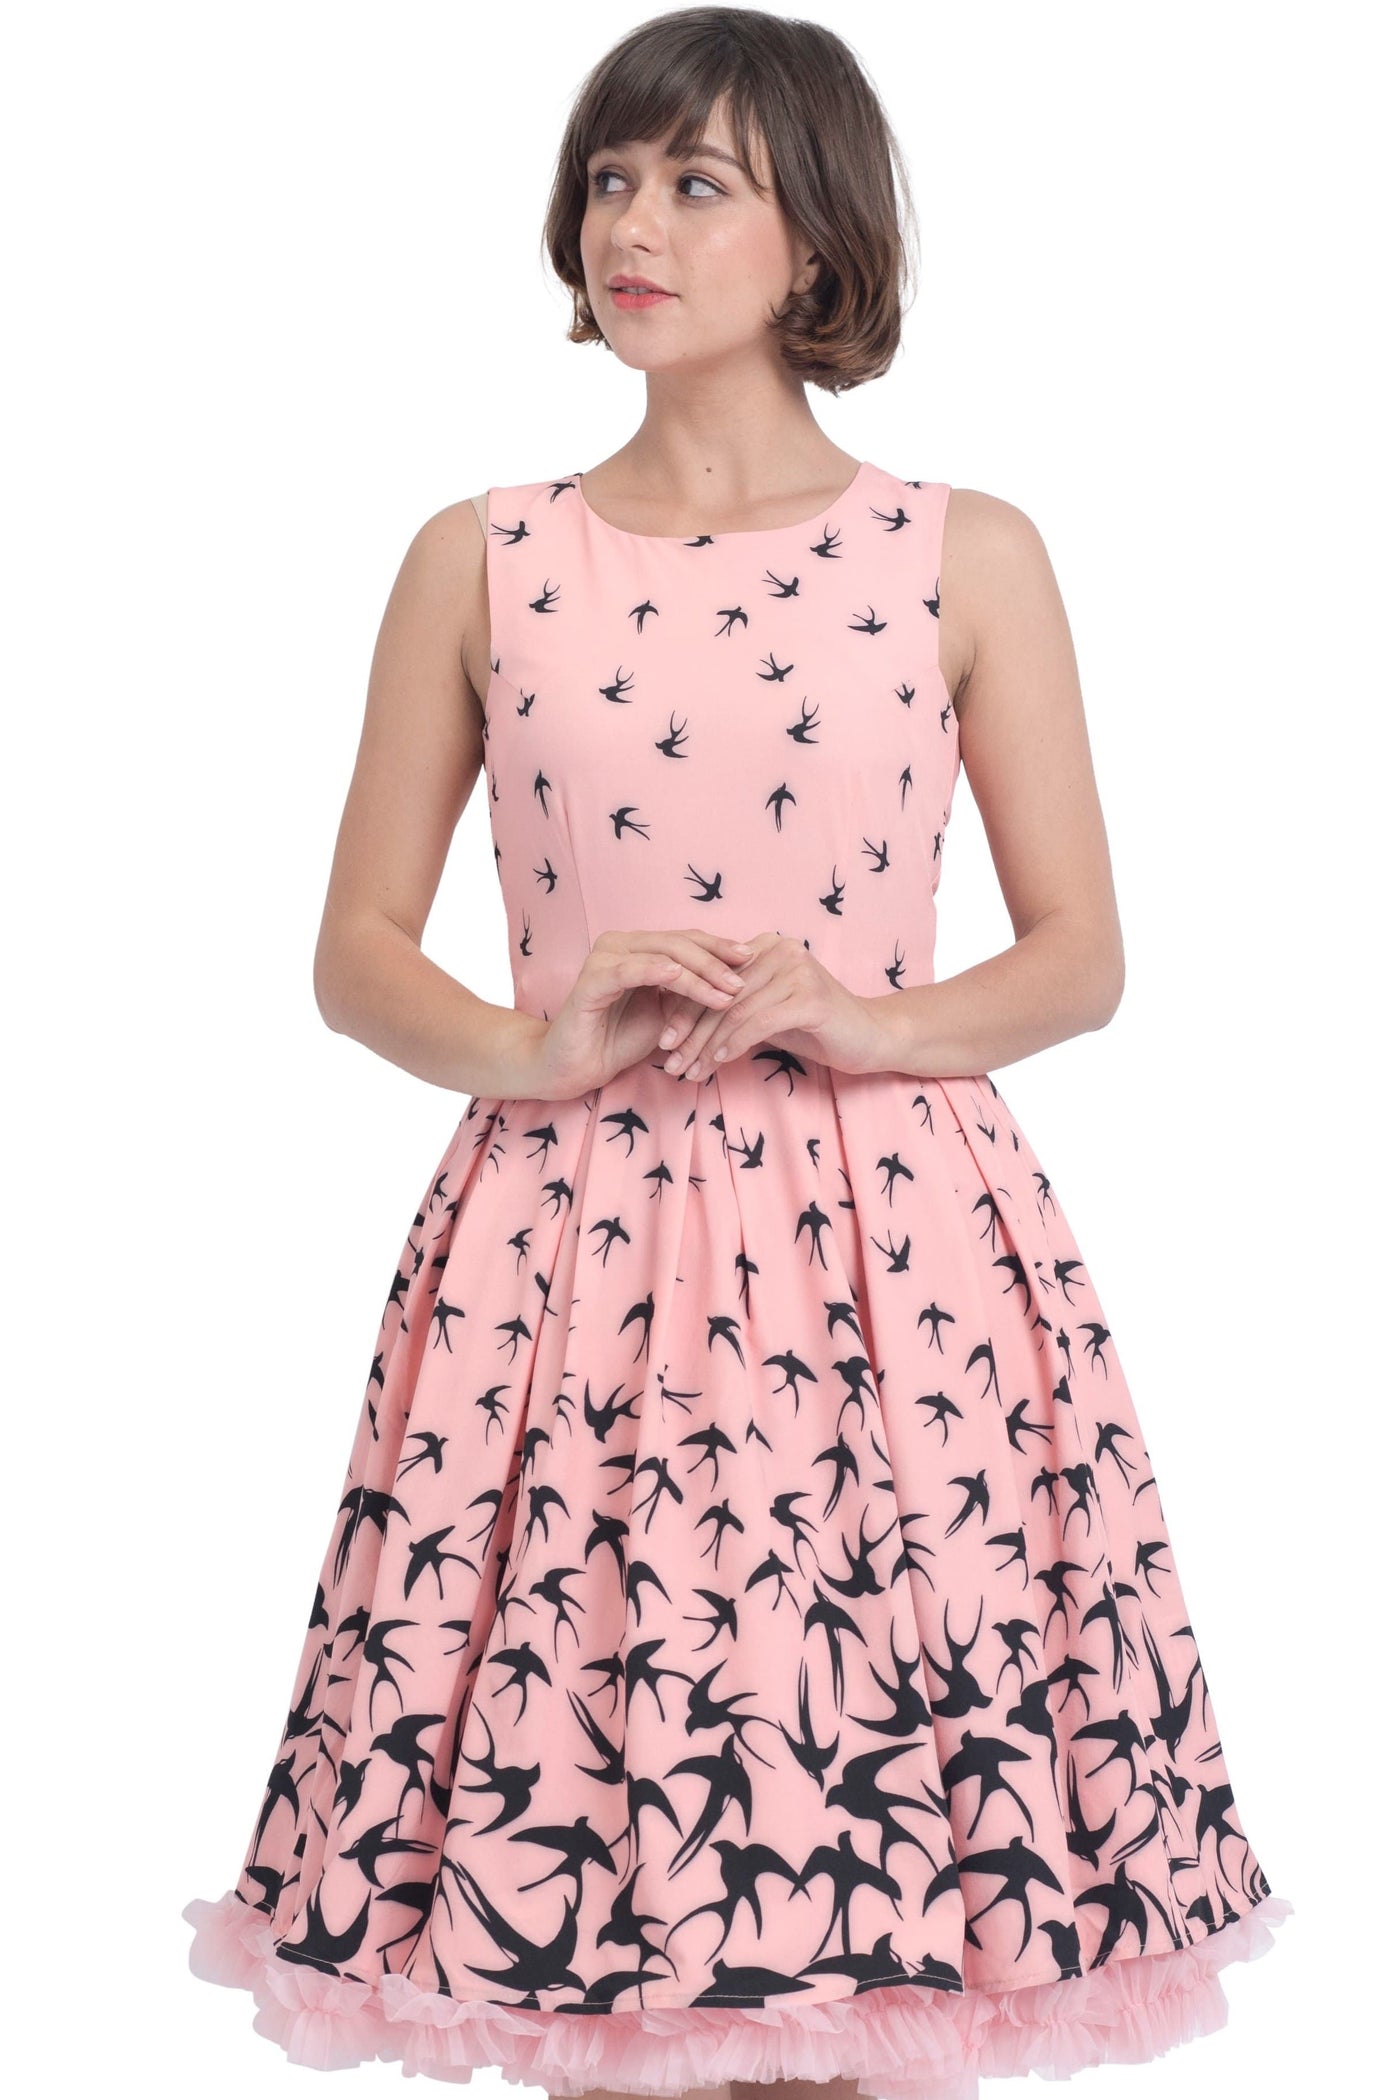 Annie Swing Dress in Pink & Black Raising Swallow Birds